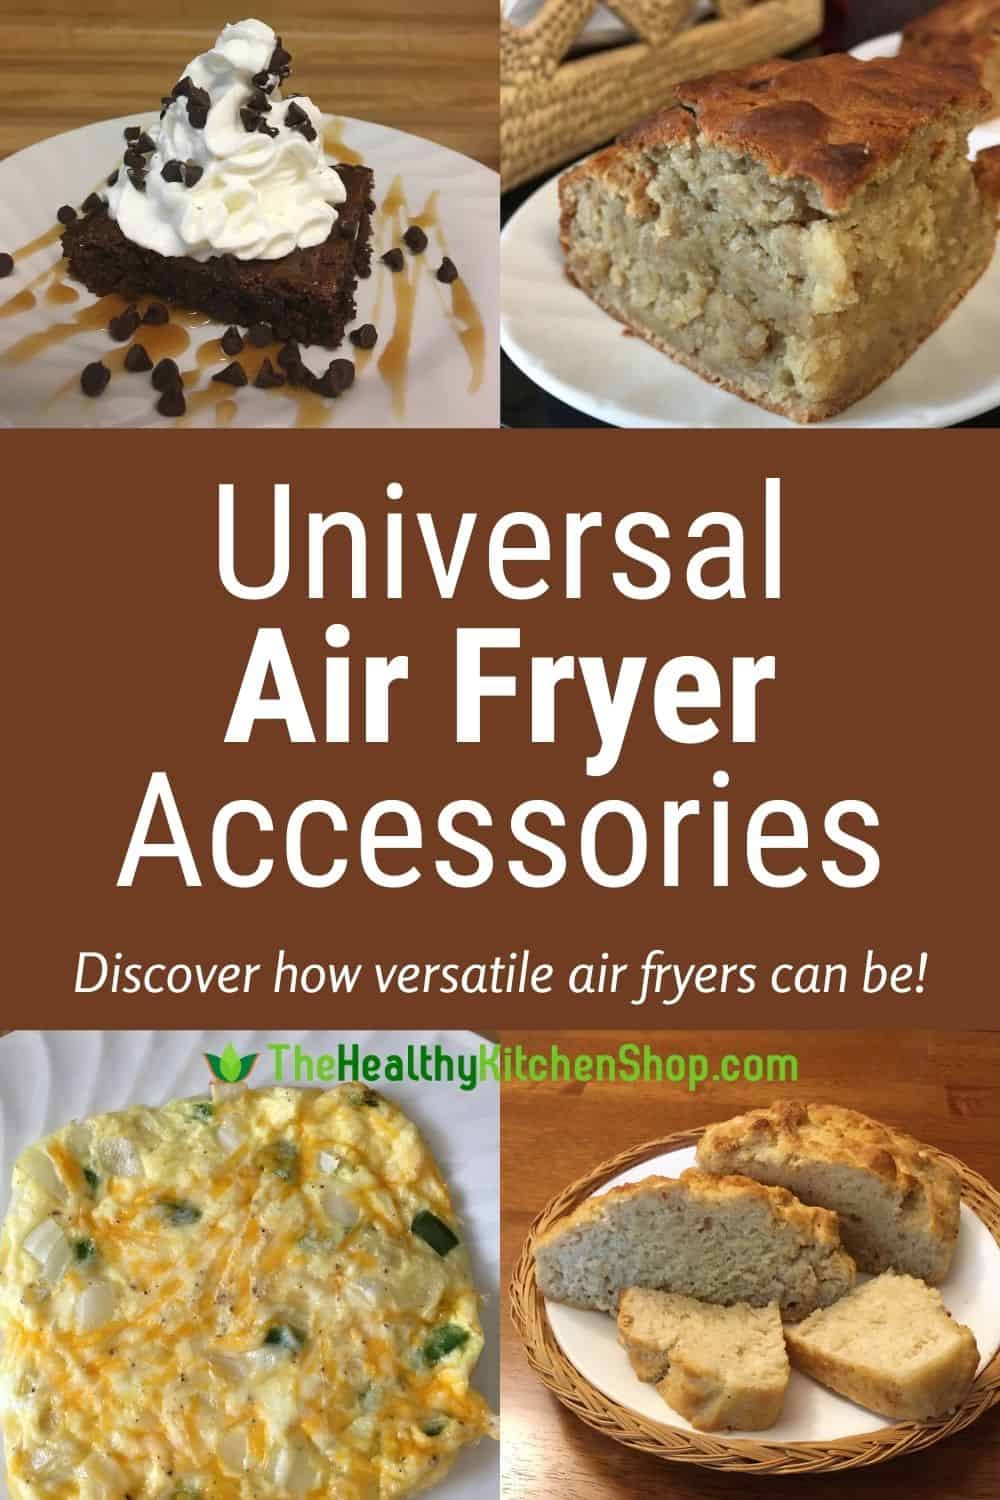 Universal Air Fryer Accessories